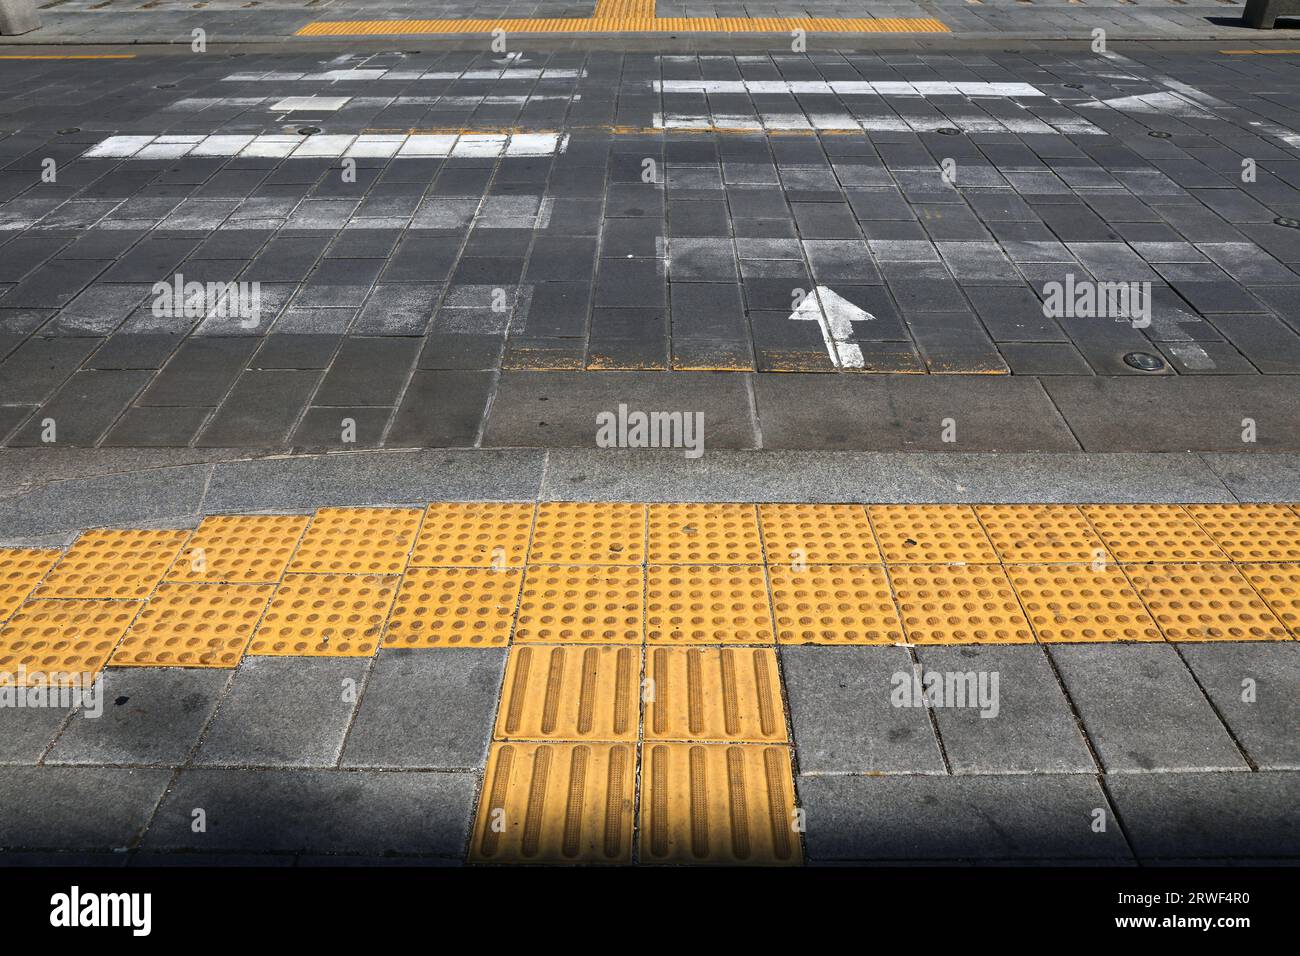 Taktiles Pflaster (Tendschi-Blöcke) am Fußgängerübergang in Seoul, Südkorea. Infrastruktur für Sehbehinderte. Stockfoto